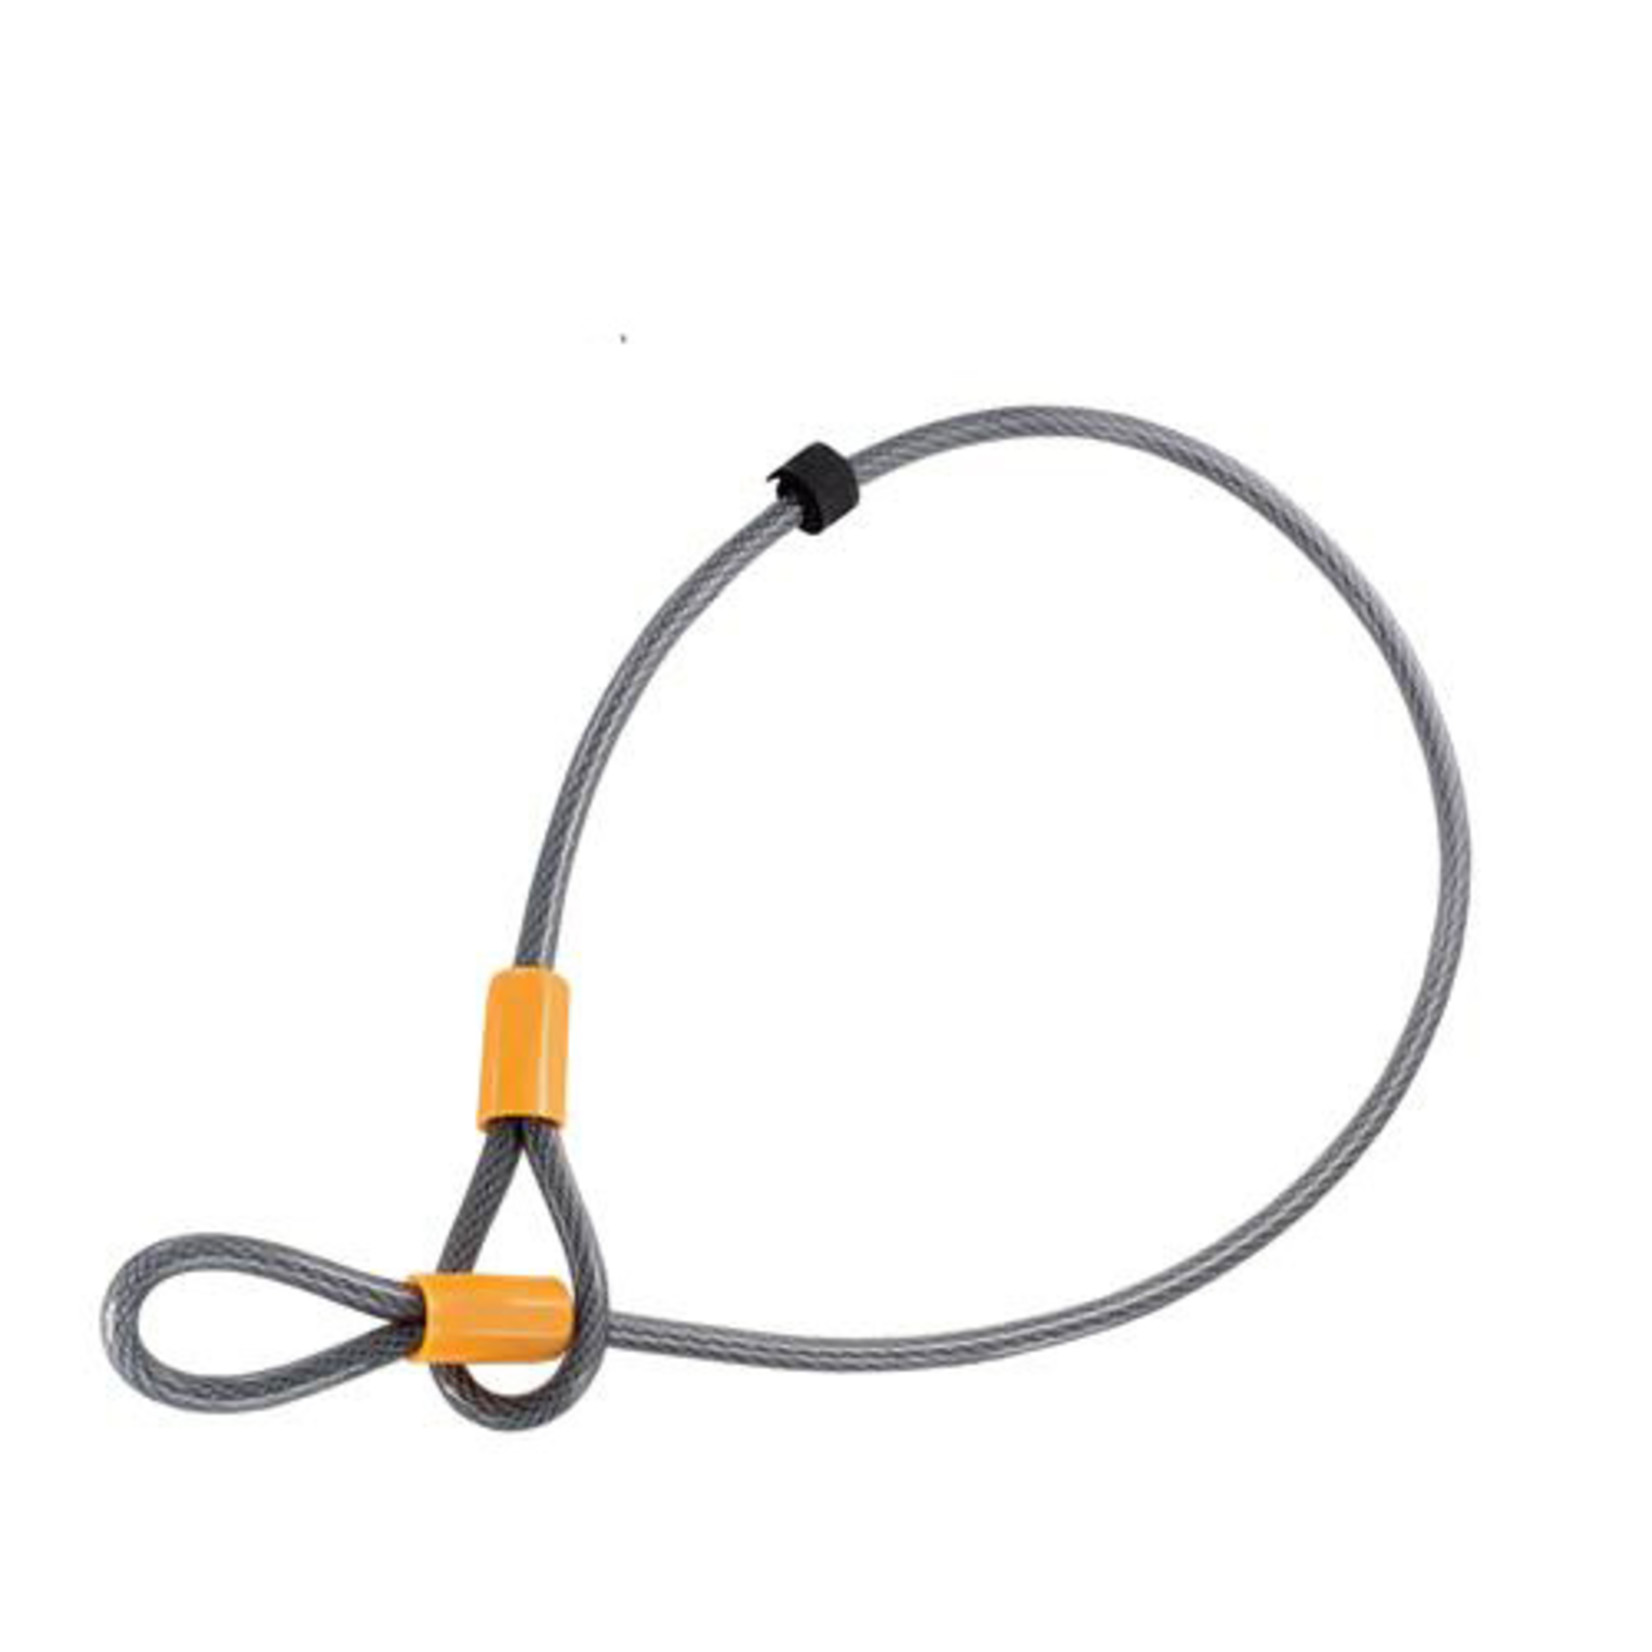 Akita Onguard Bike Lock - Akita Series - Extra Flexible Steel Cable Short - 53cm X 5mm